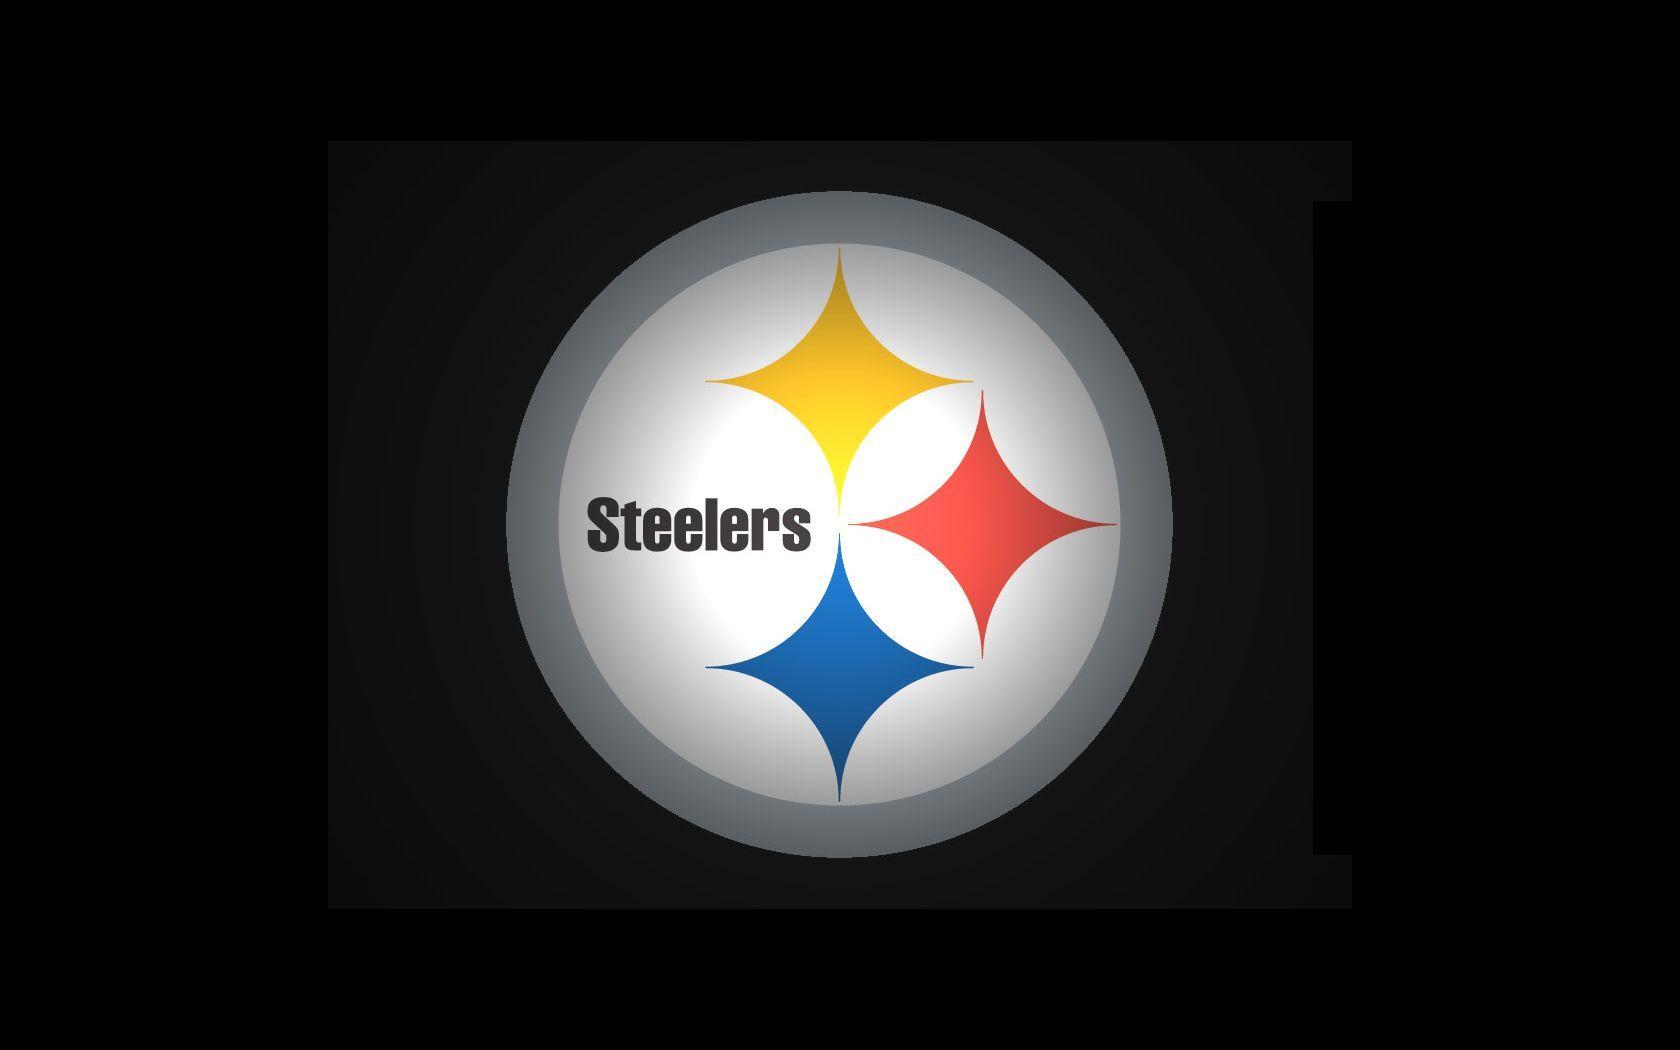 New Pittsburgh Steelers wallpaper background. Pittsburgh Steelers